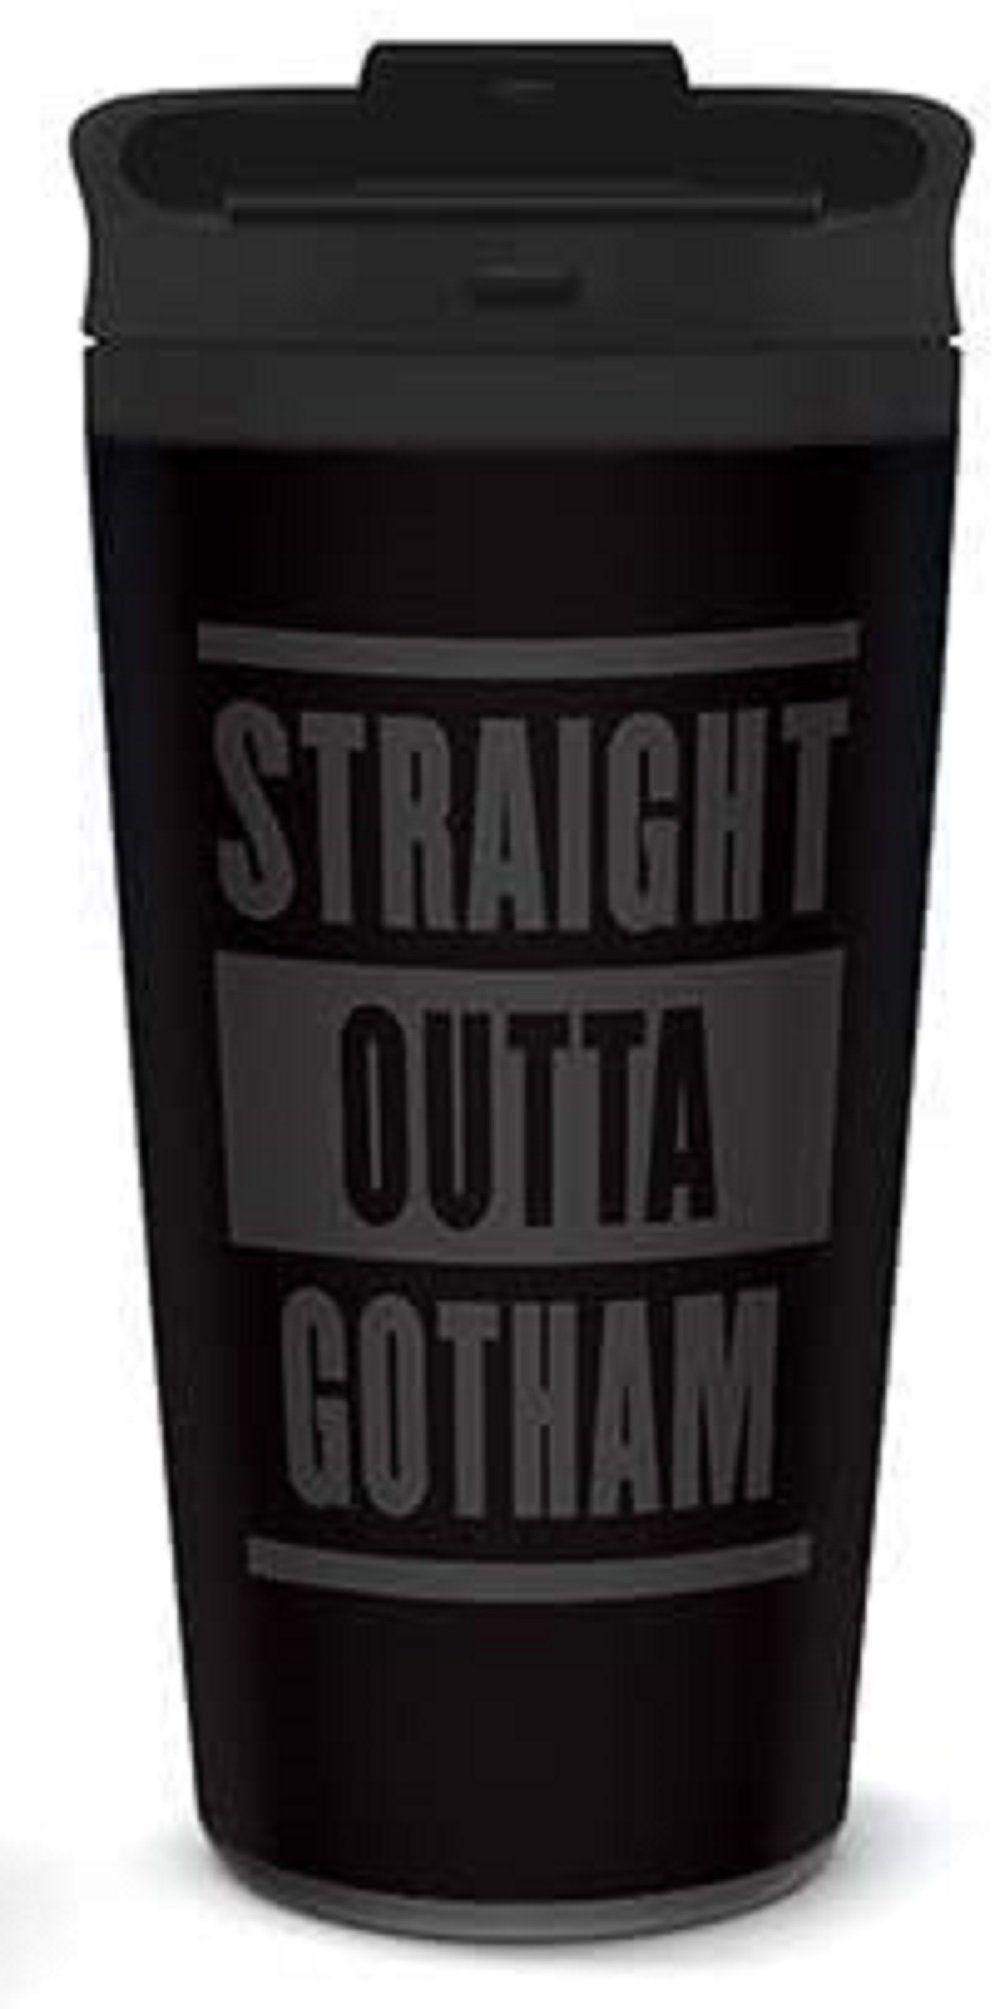 BATMAN - - outta straight Gotham - Edelstahl PYRAMID Edelstahlbecher, PYRAMID Coffee-to-go-Becher